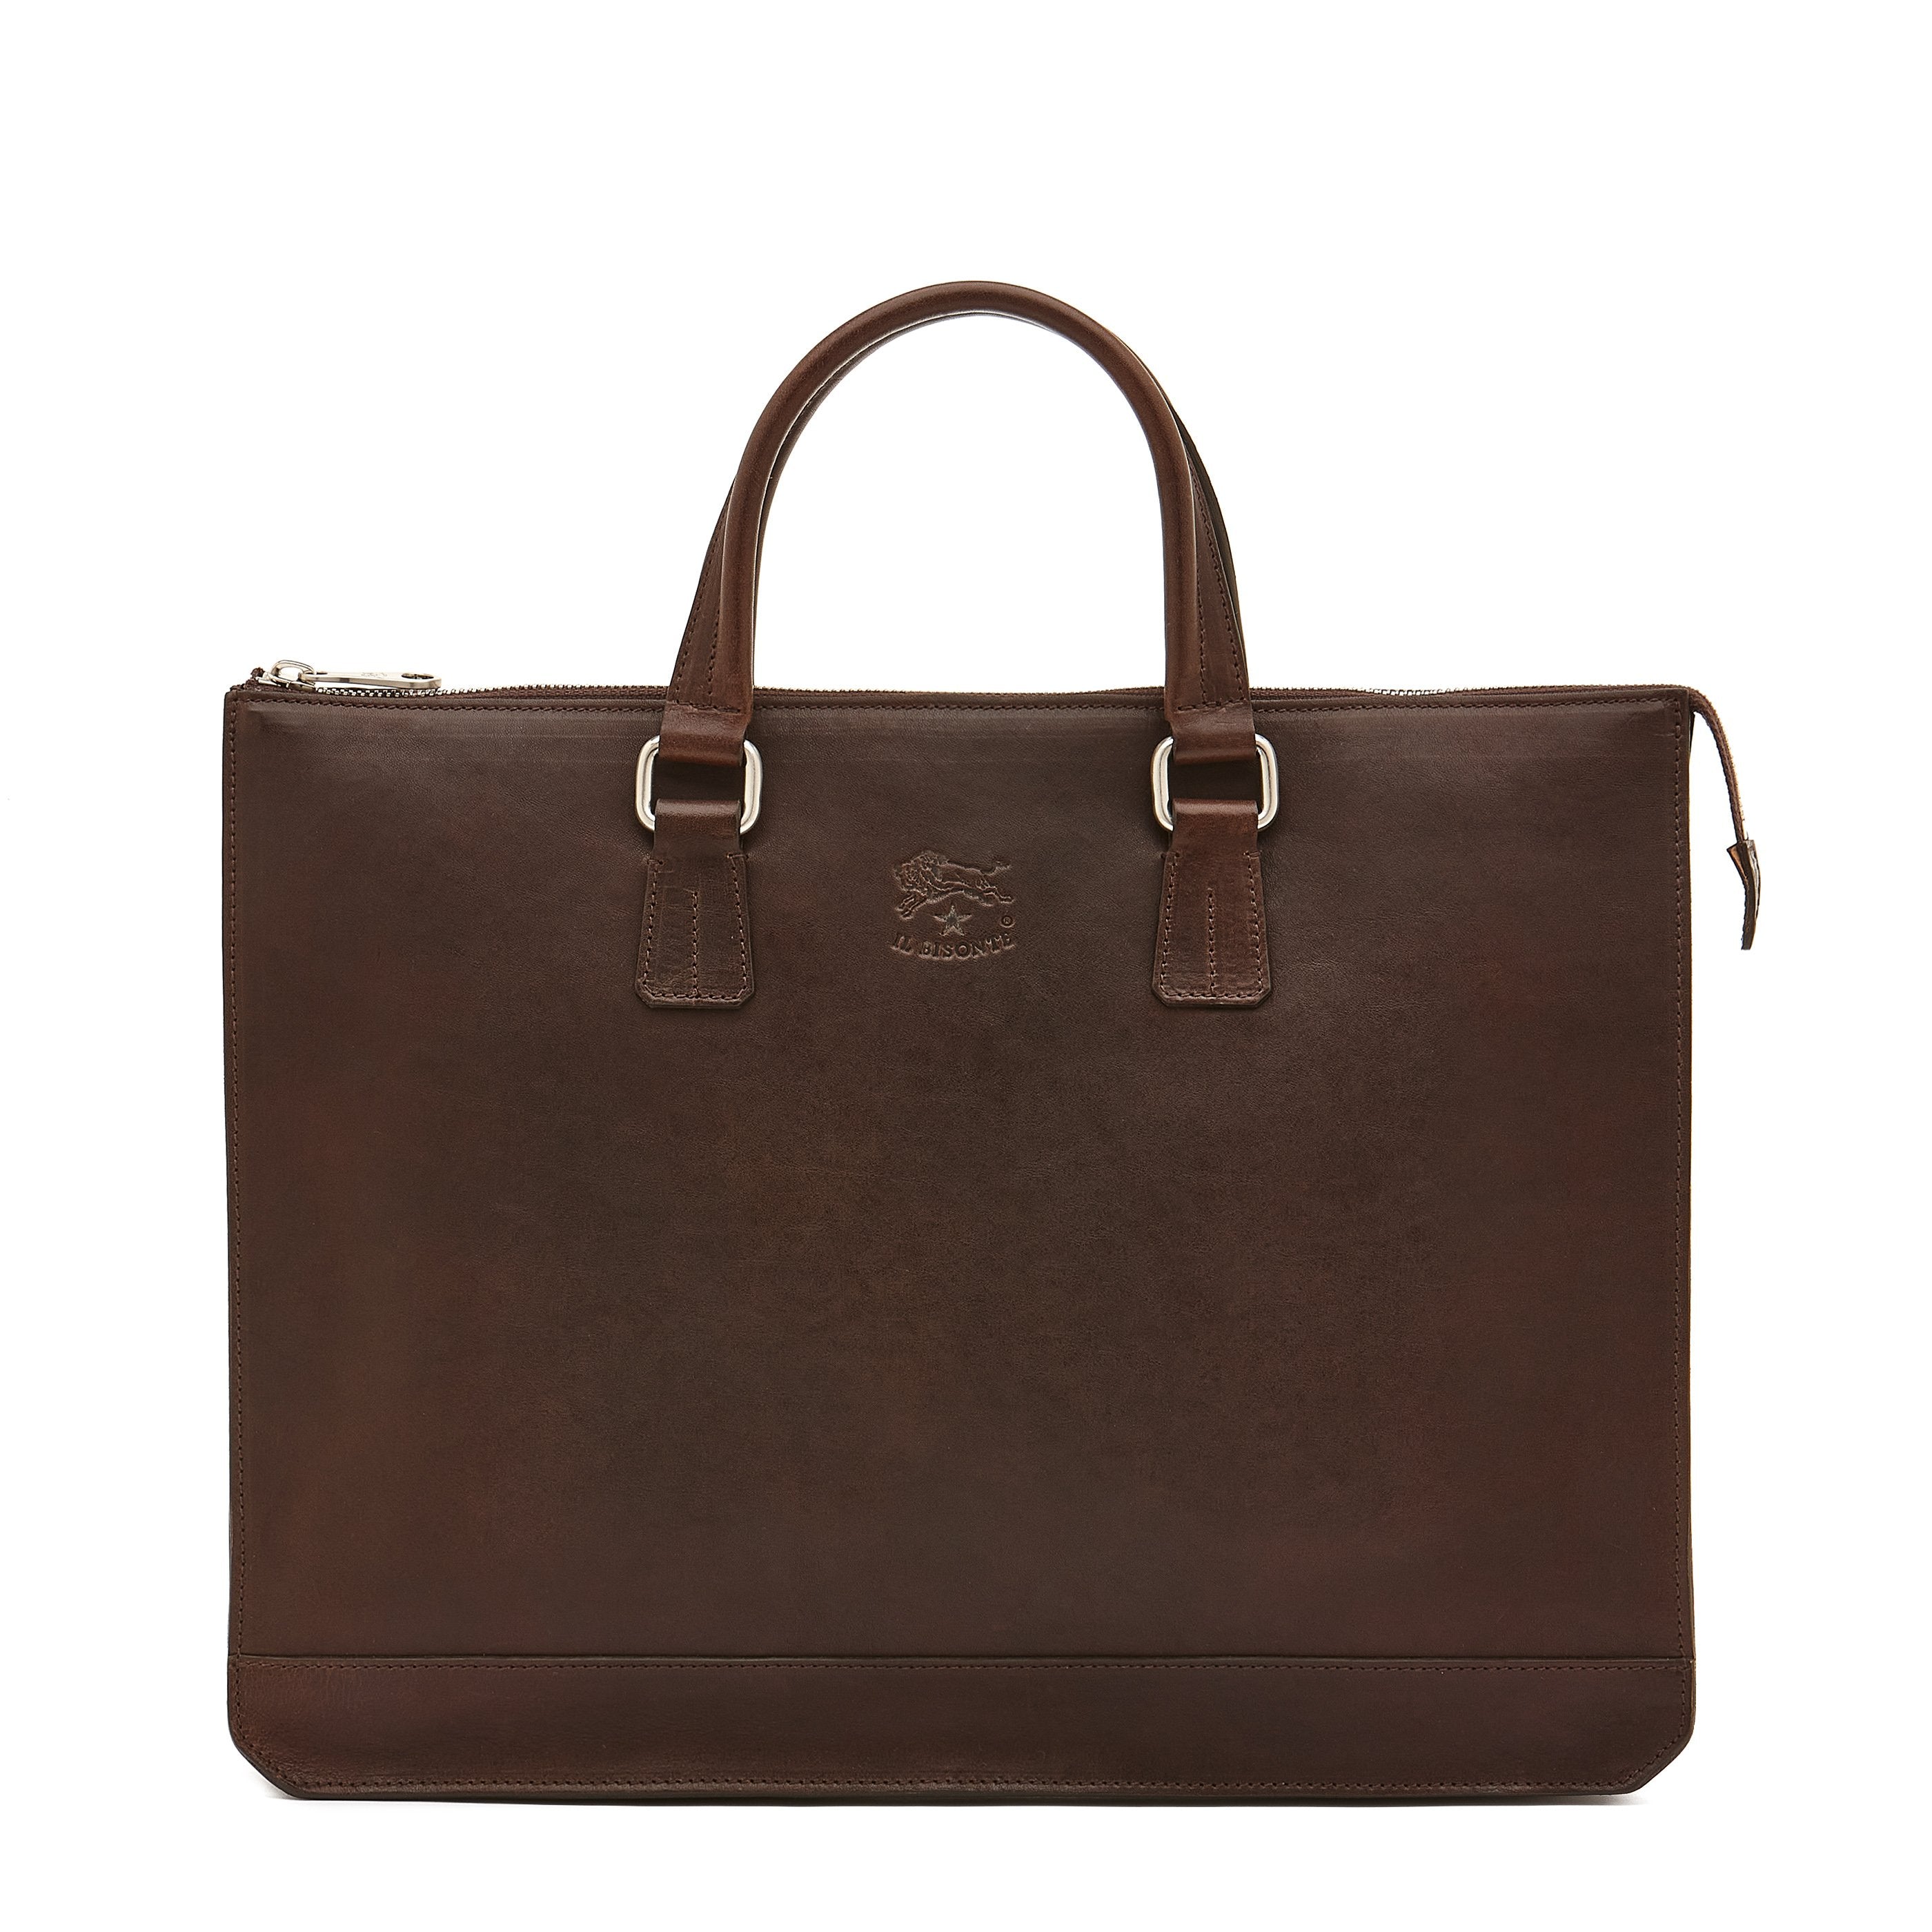 Meleto | Men's briefcase in vintage leather color coffee